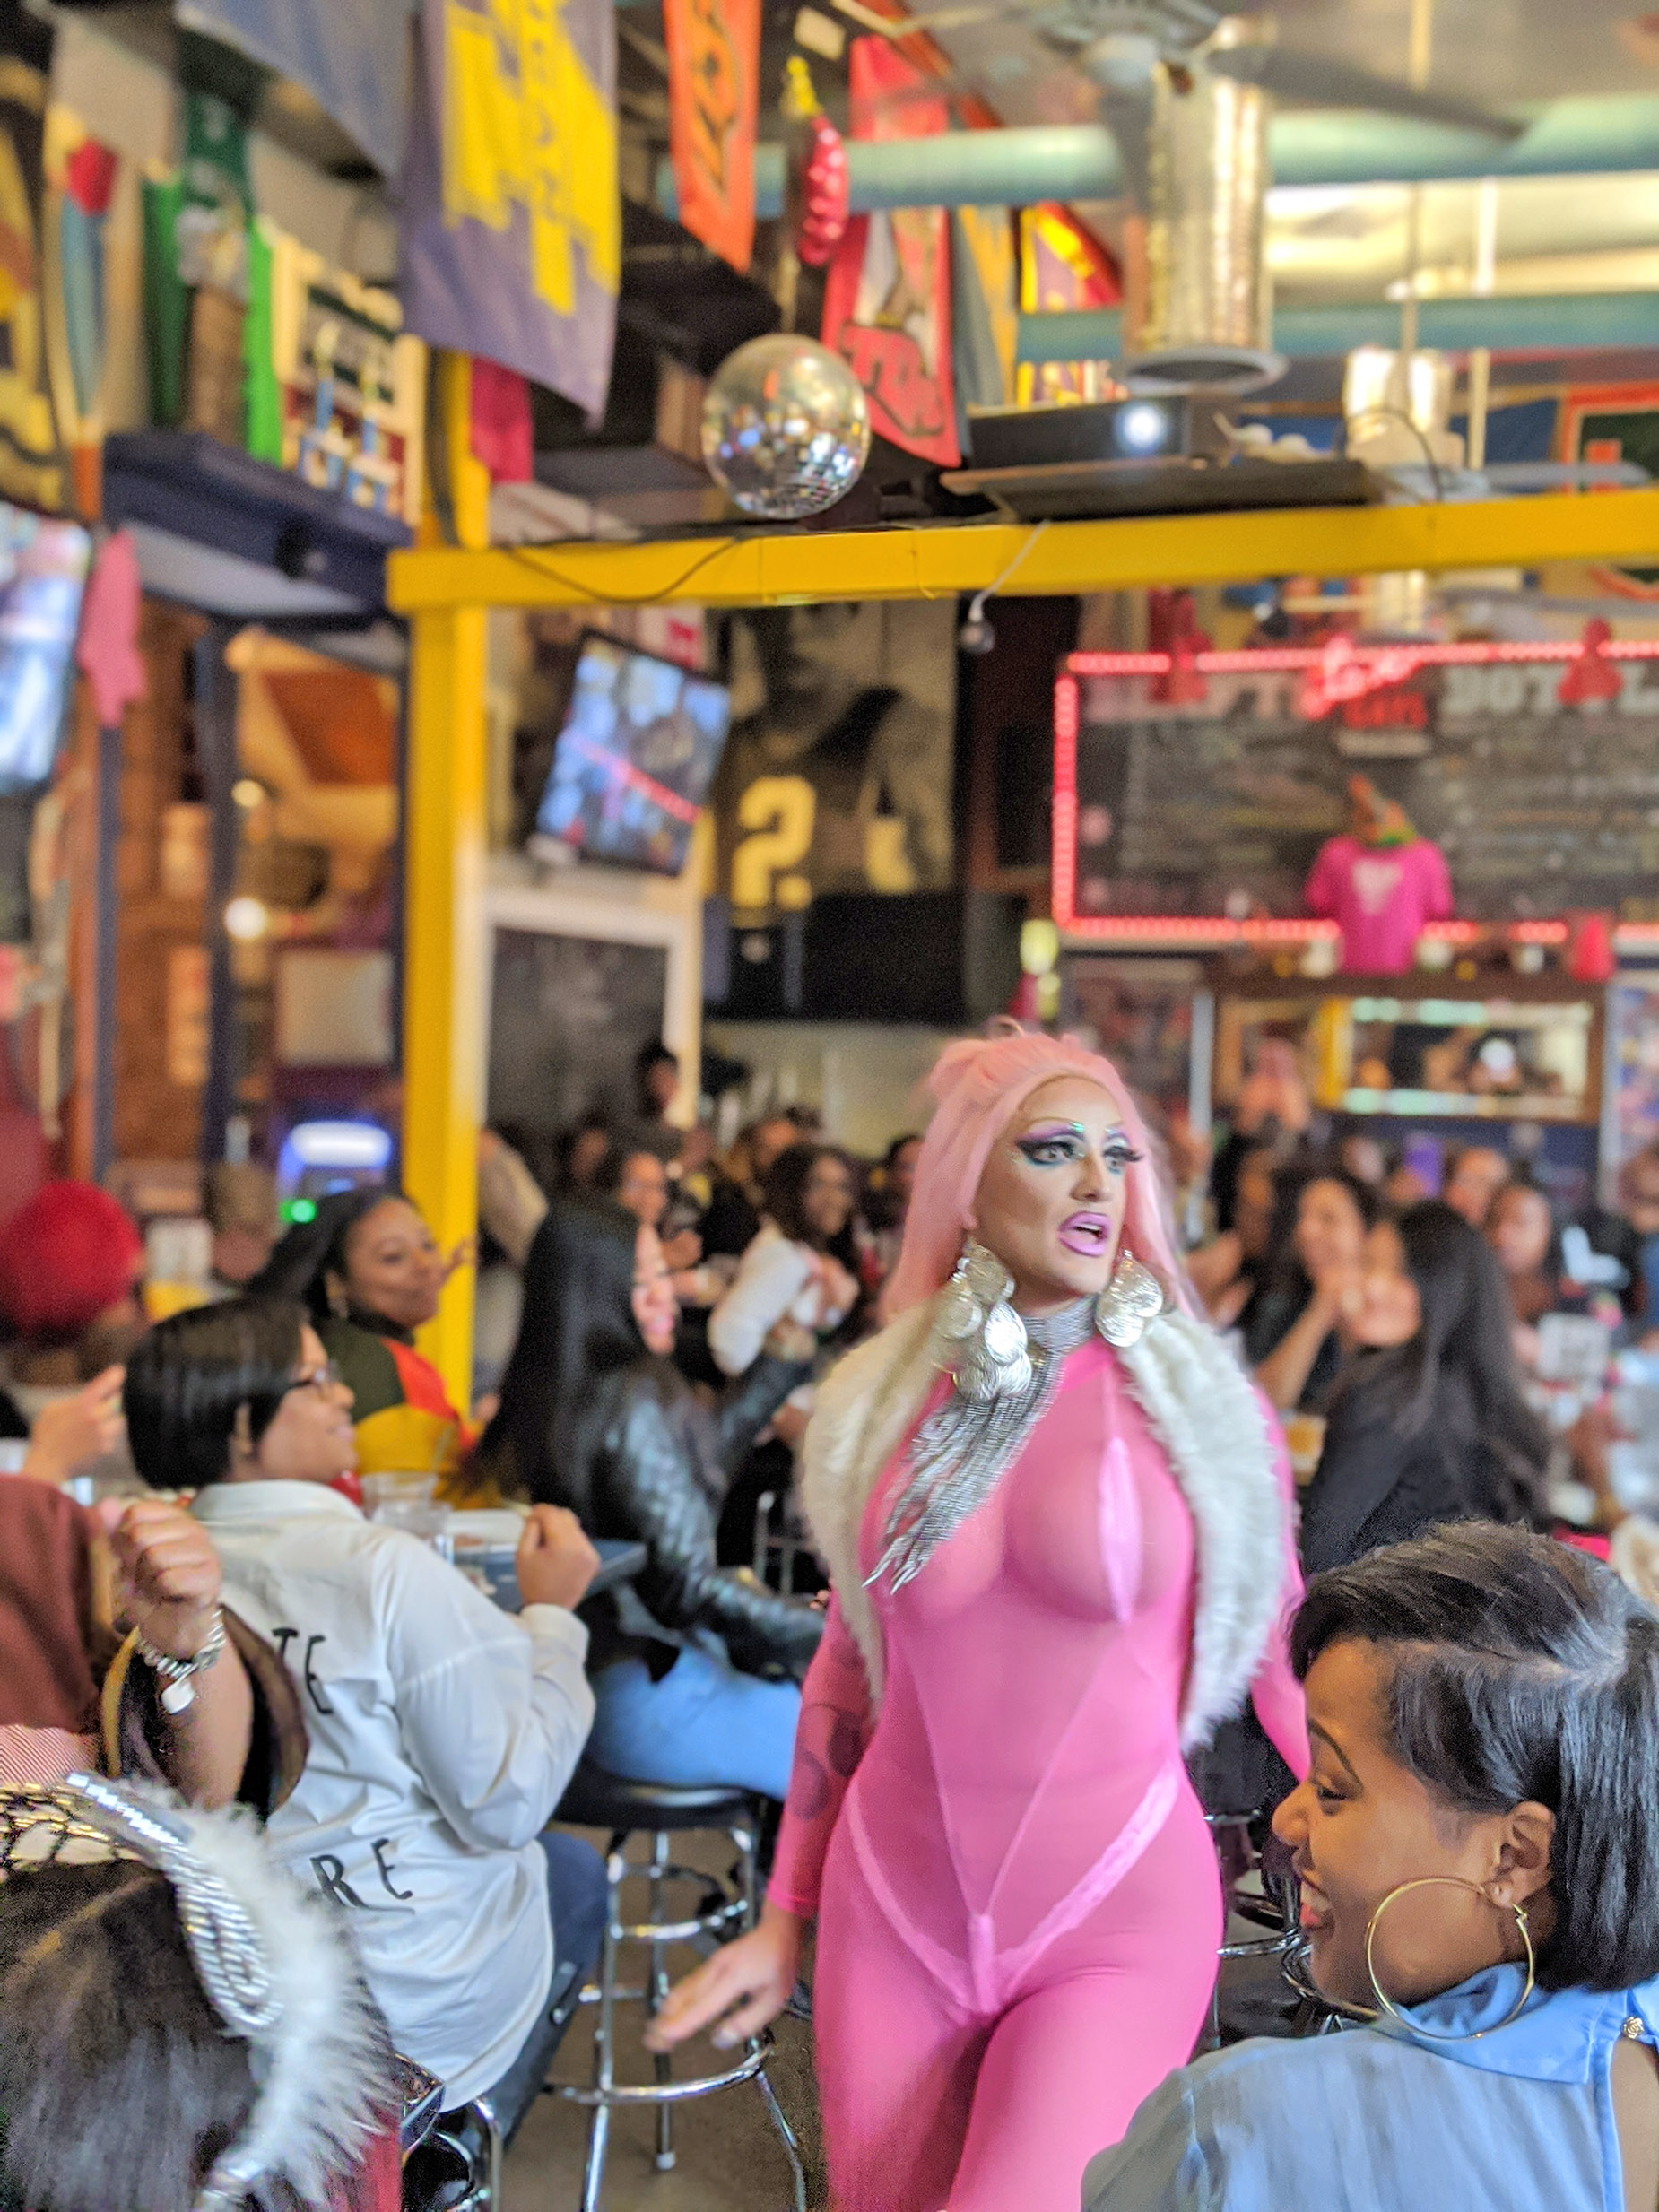 Washington DC Drag Queen Alexa Shontelle at Nellies Sports Bar drag brunch.